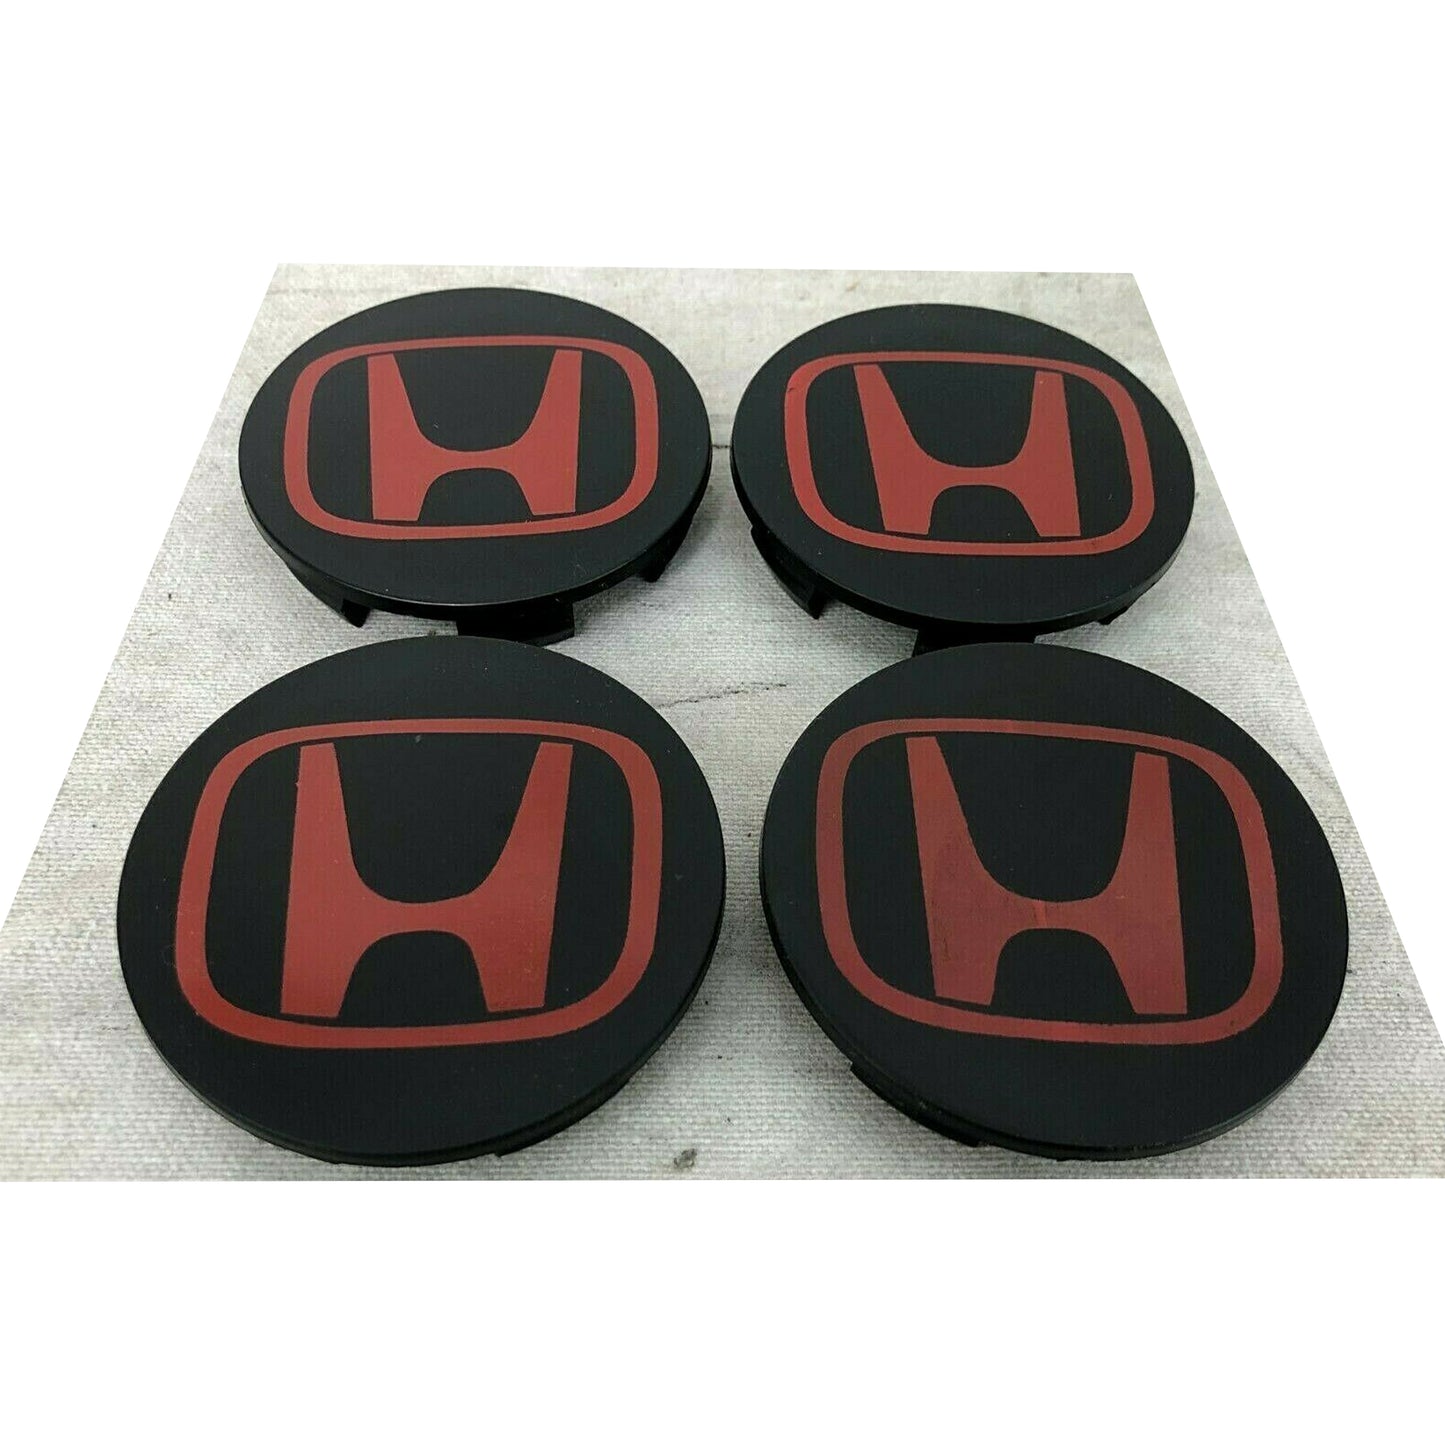 Honda Civic CRV Set of 4 Wheel Rim Center Caps Black/Red Logo 69MM/2.75'